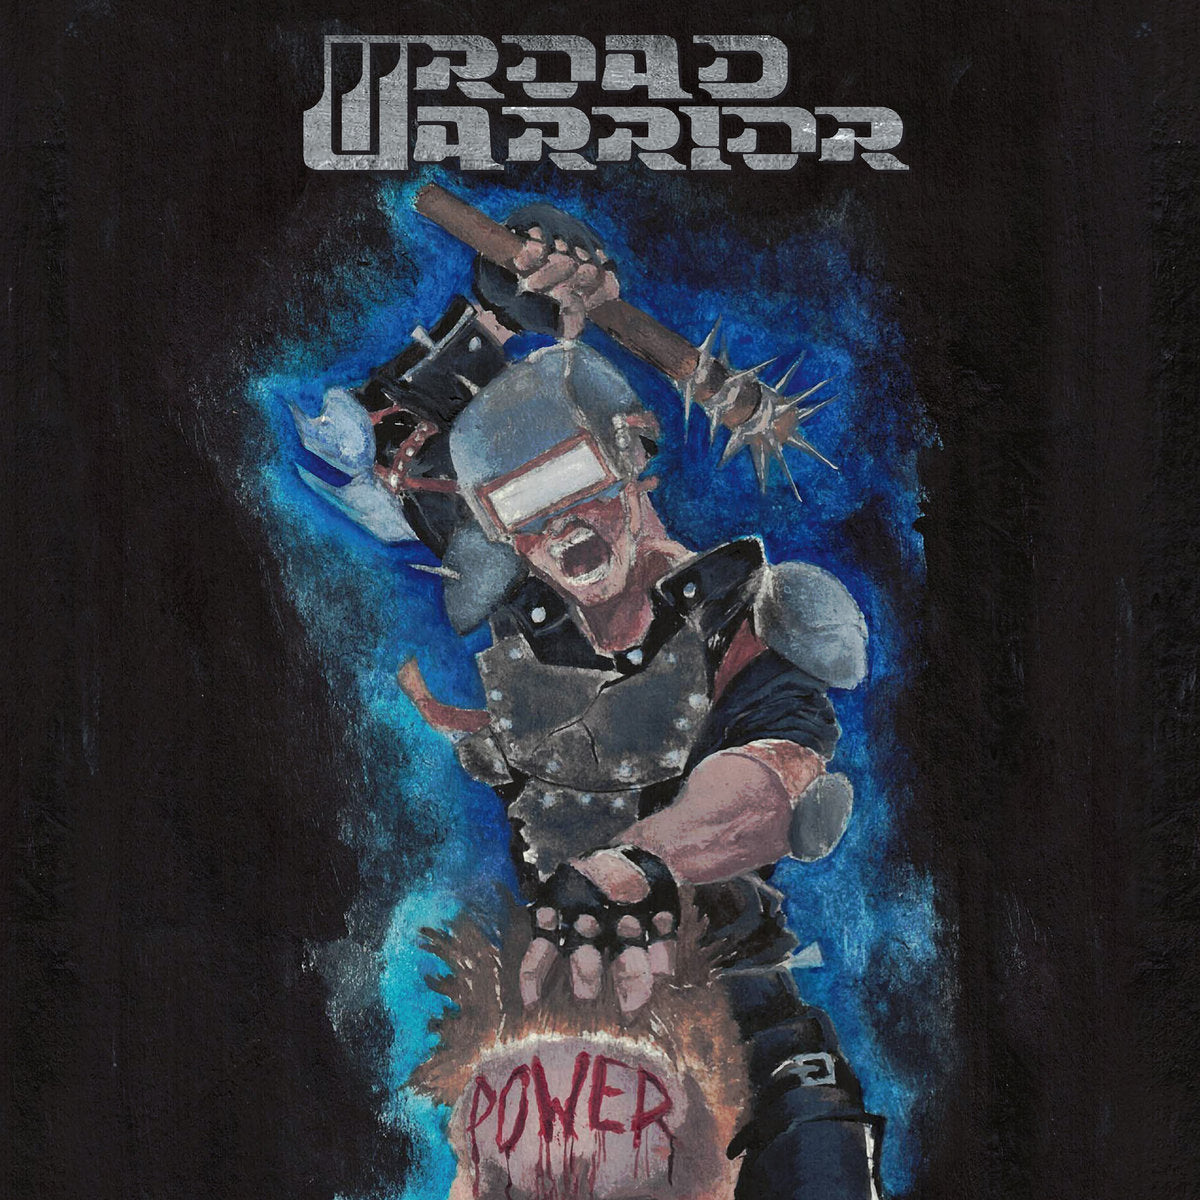 Road Warrior - Power